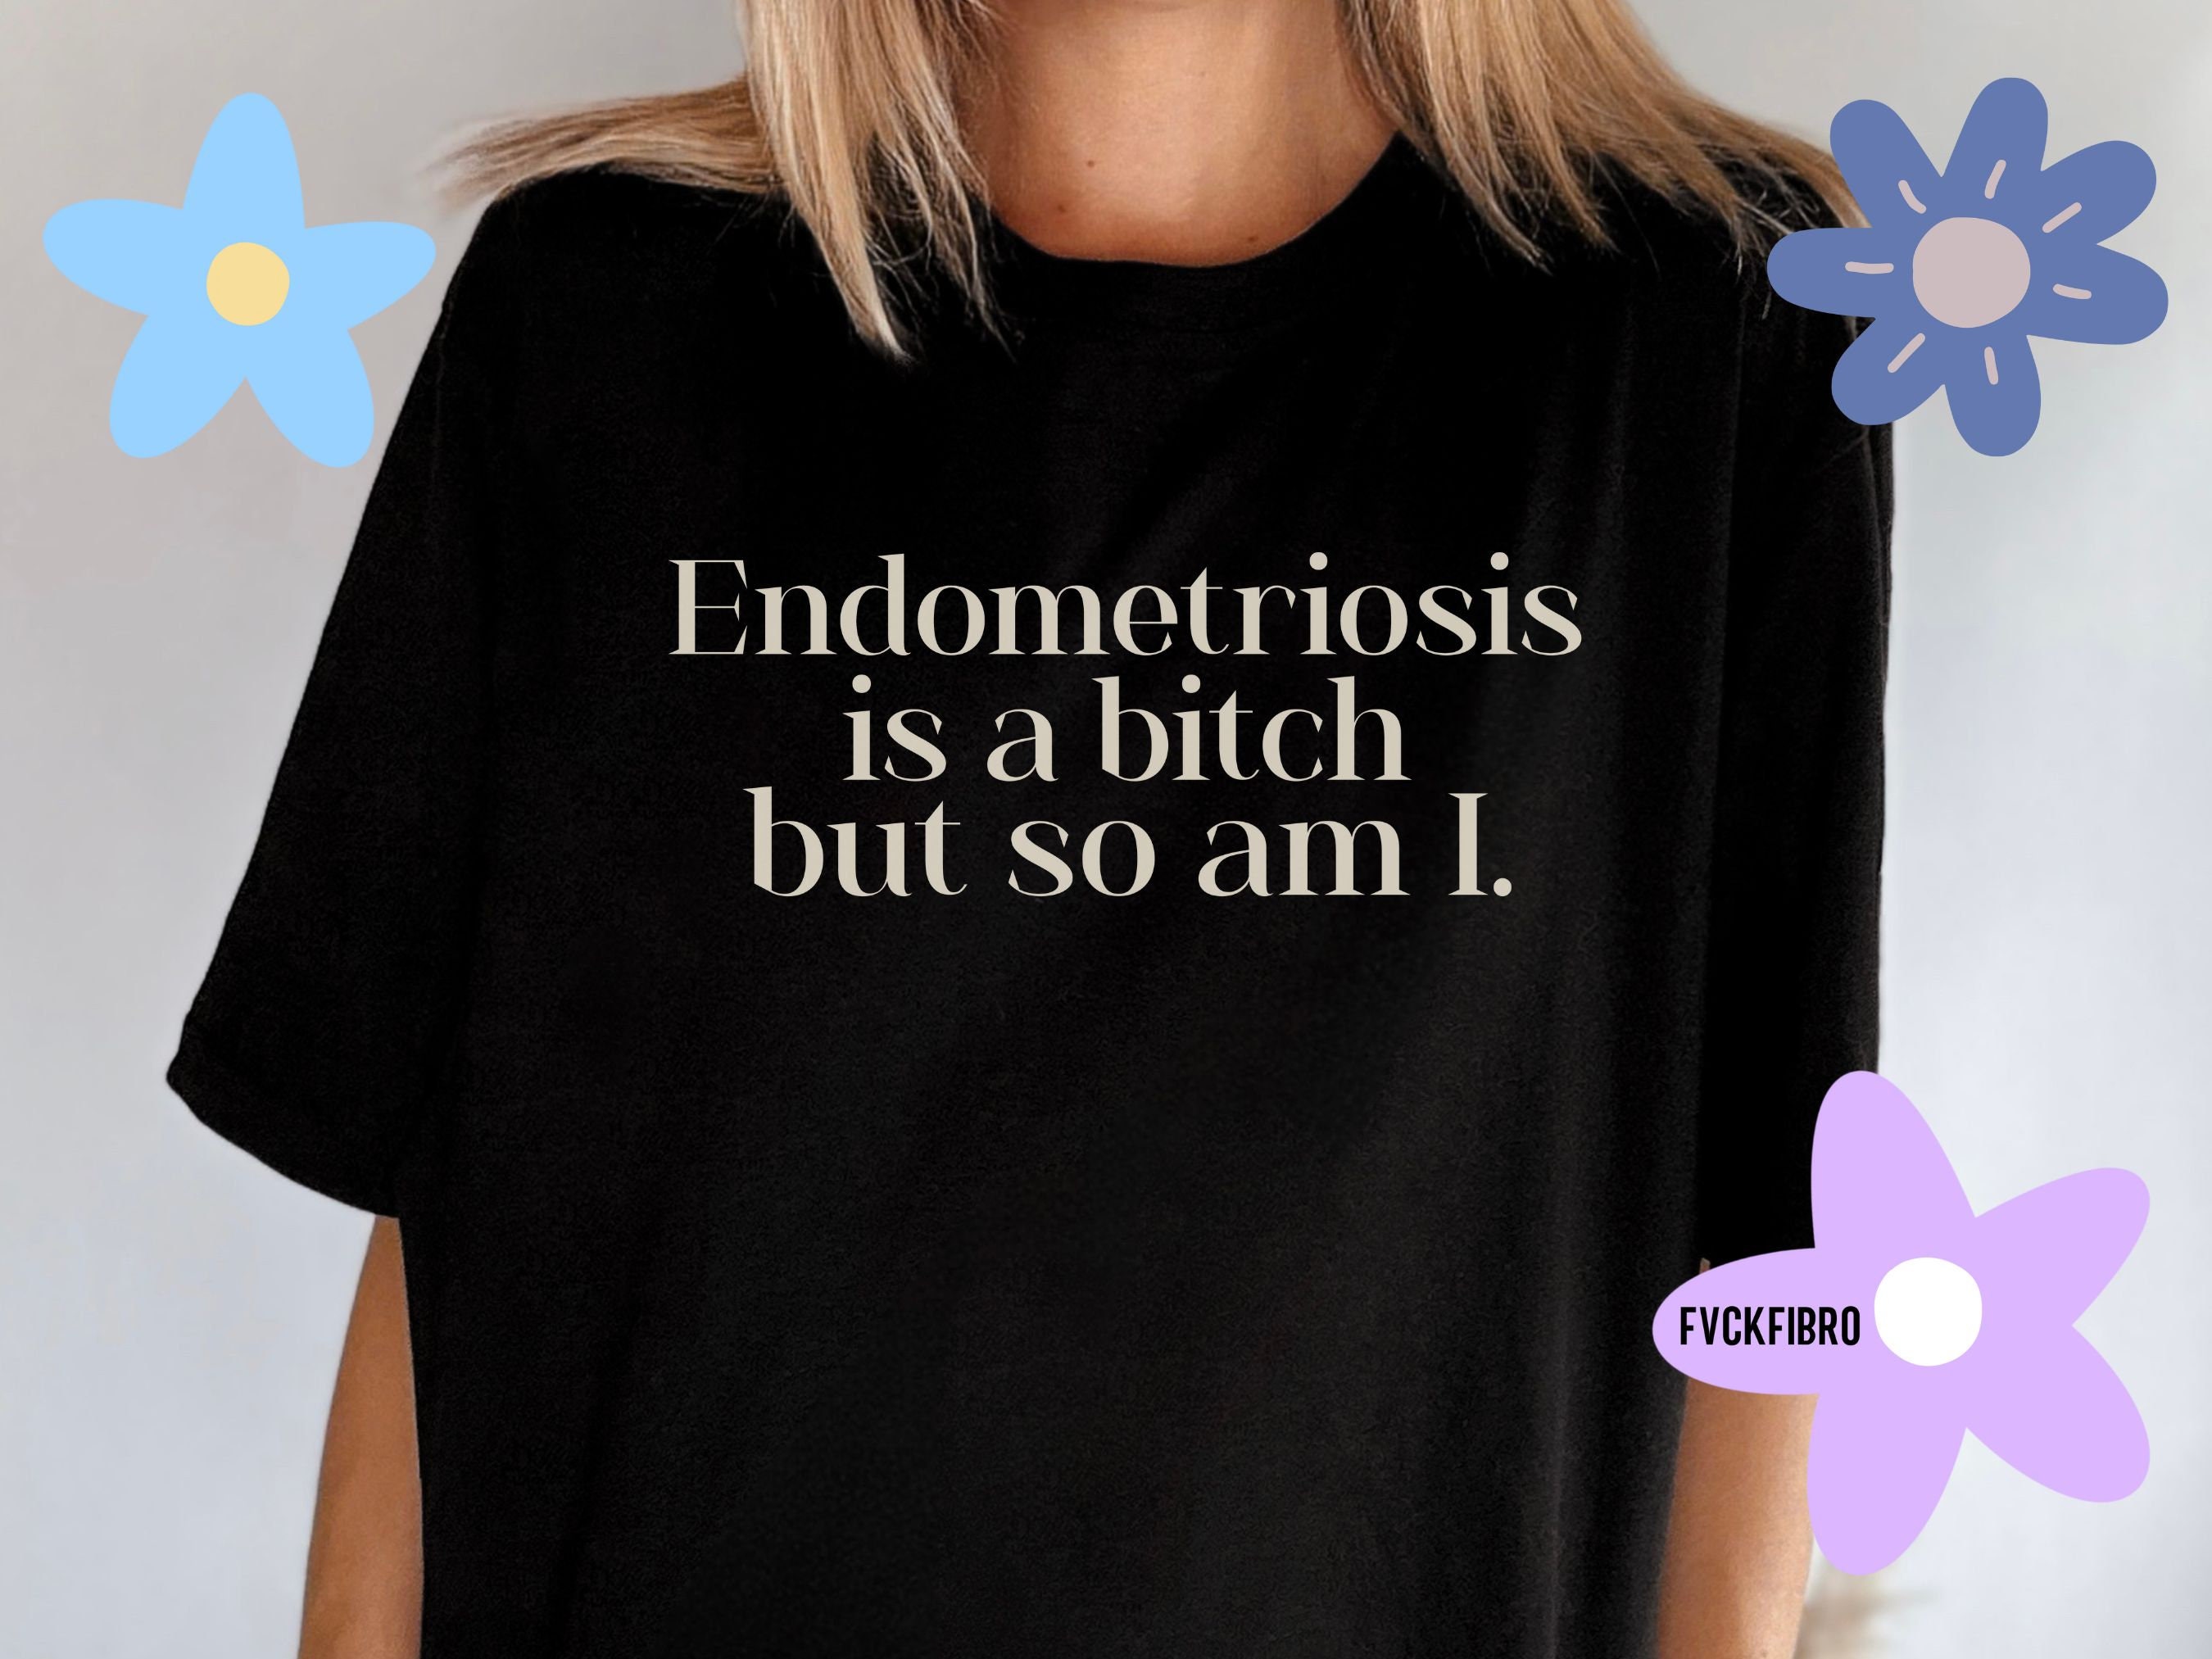 Endometriosis Survival Kit, Pants & Pads